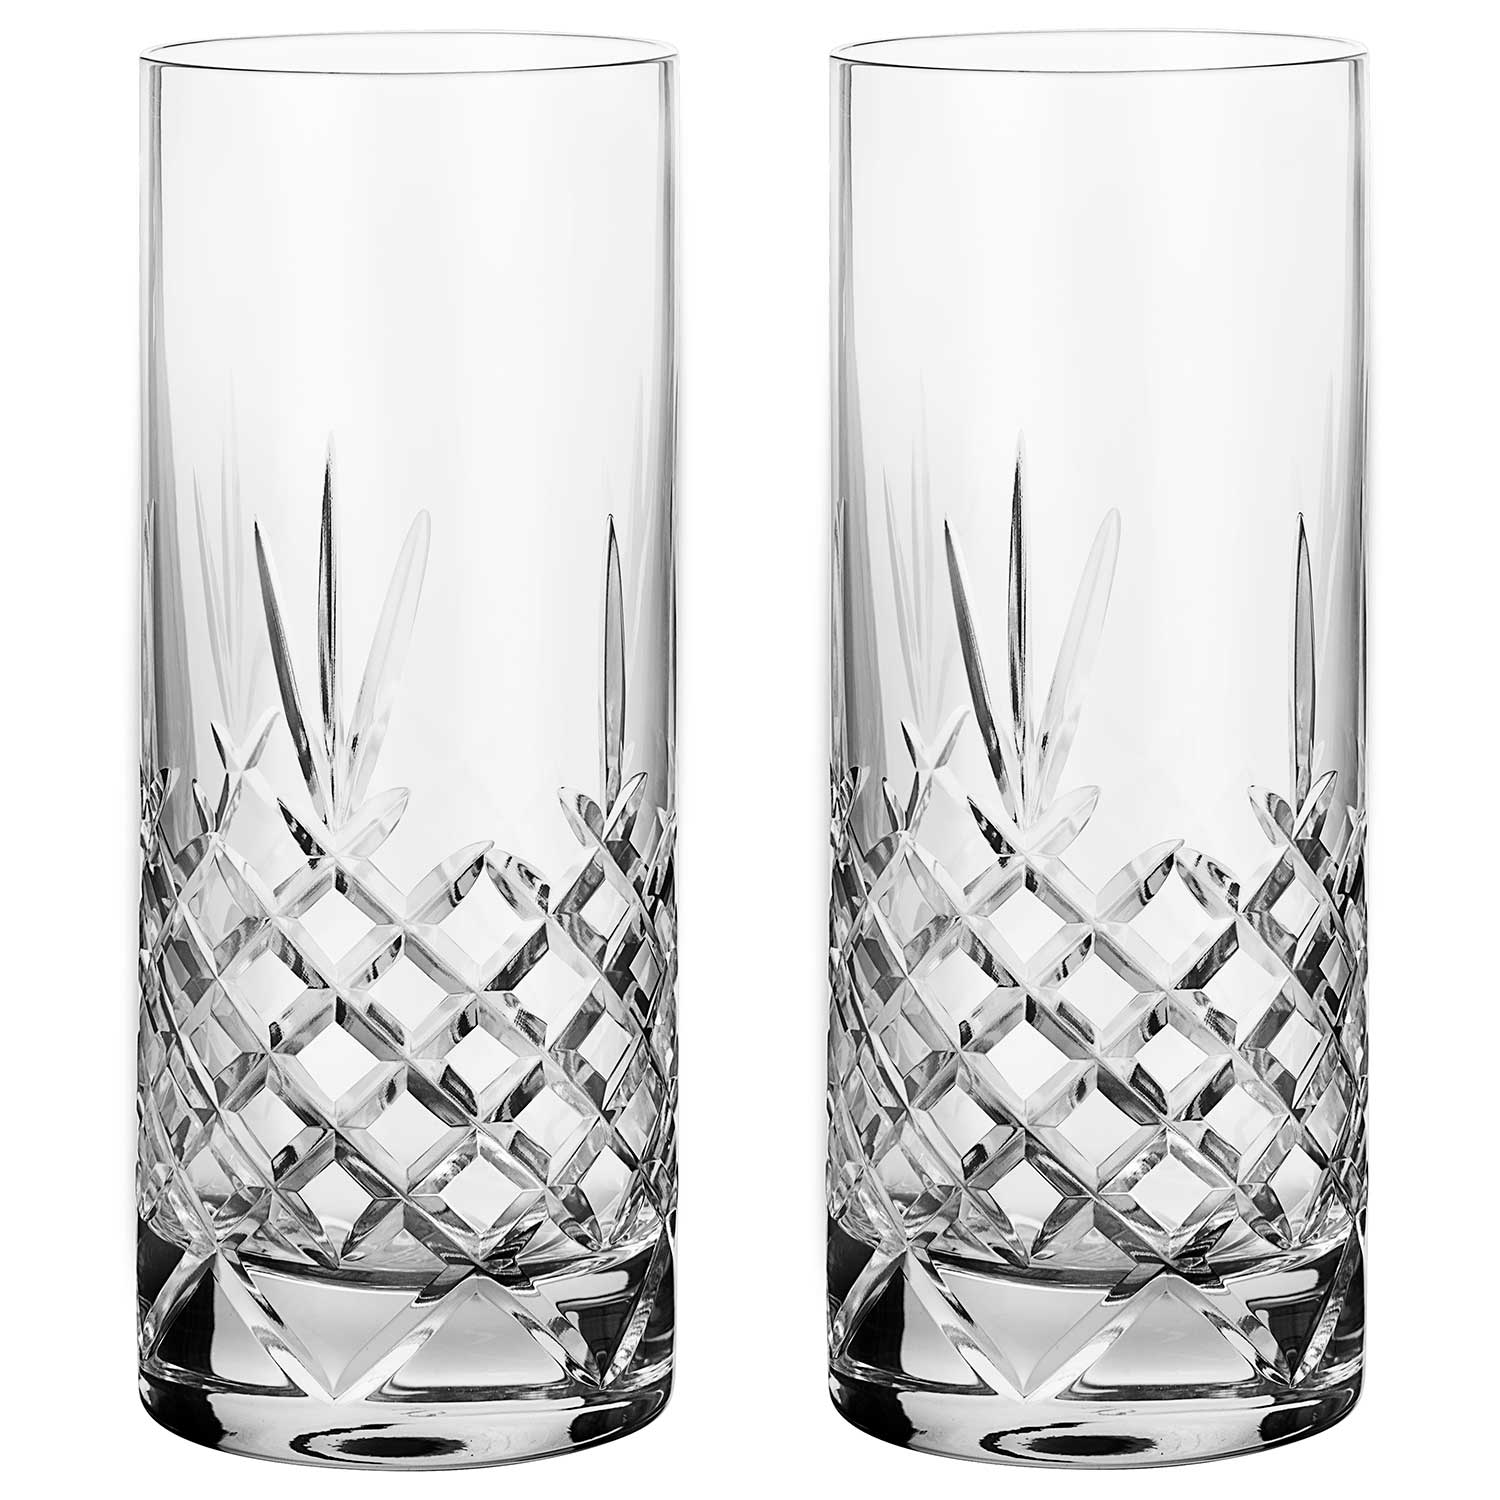 Frederik Bagger Crispy Highballglas 2-pack - Highballglas & Longdrinkglas Kristallglas Klar